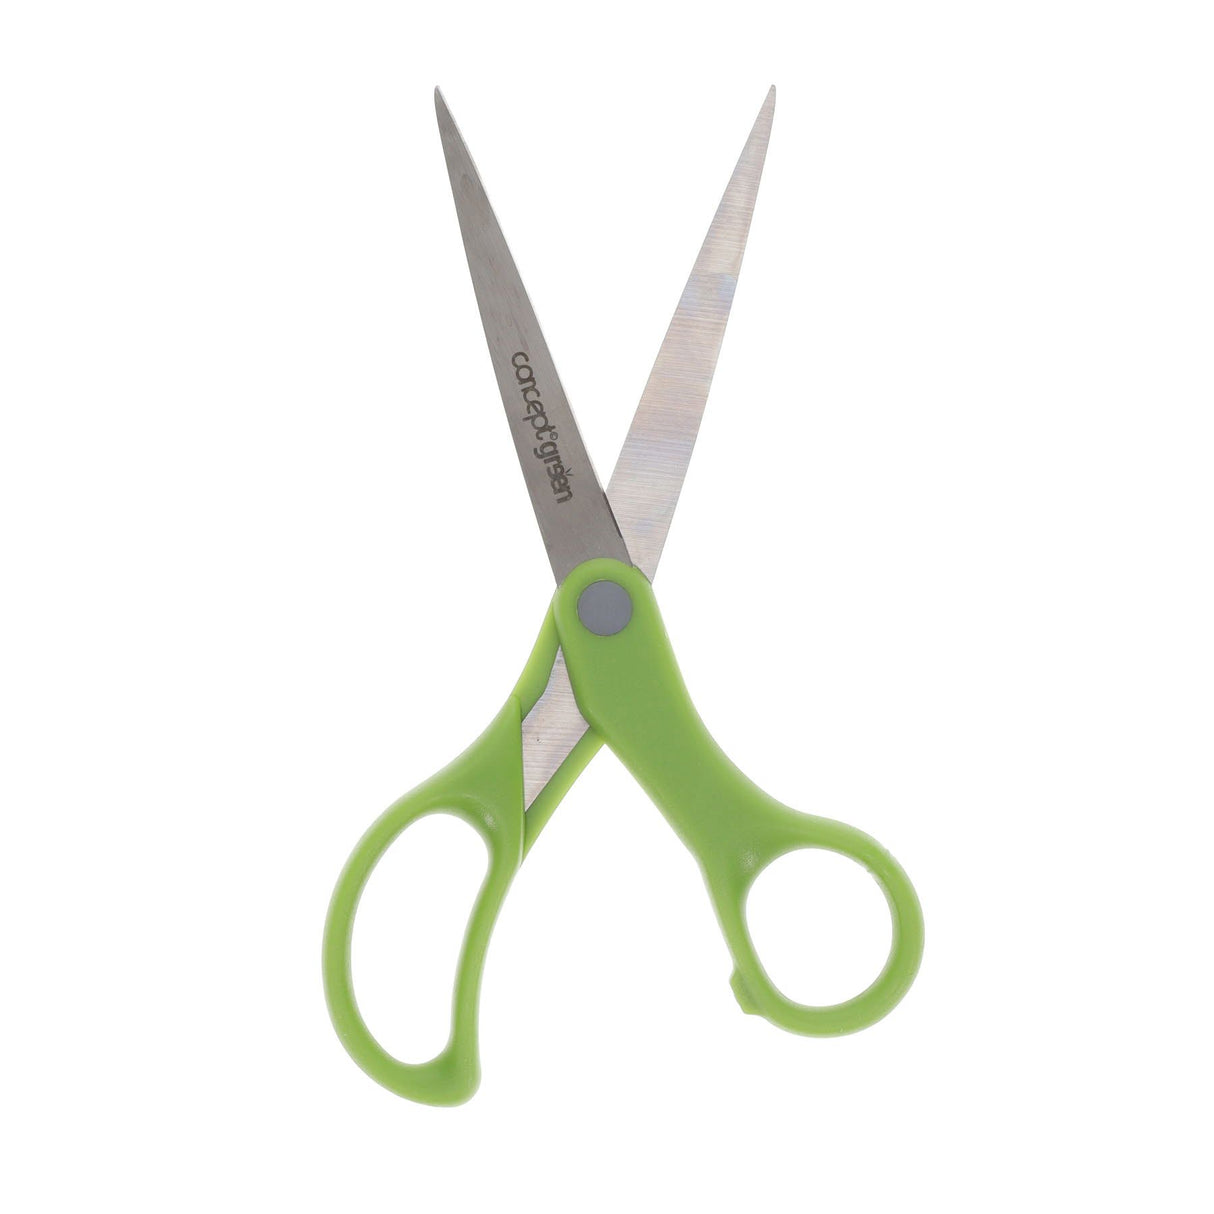 Concept Green Scissors - 17.8cm - Green | Stationery Shop UK